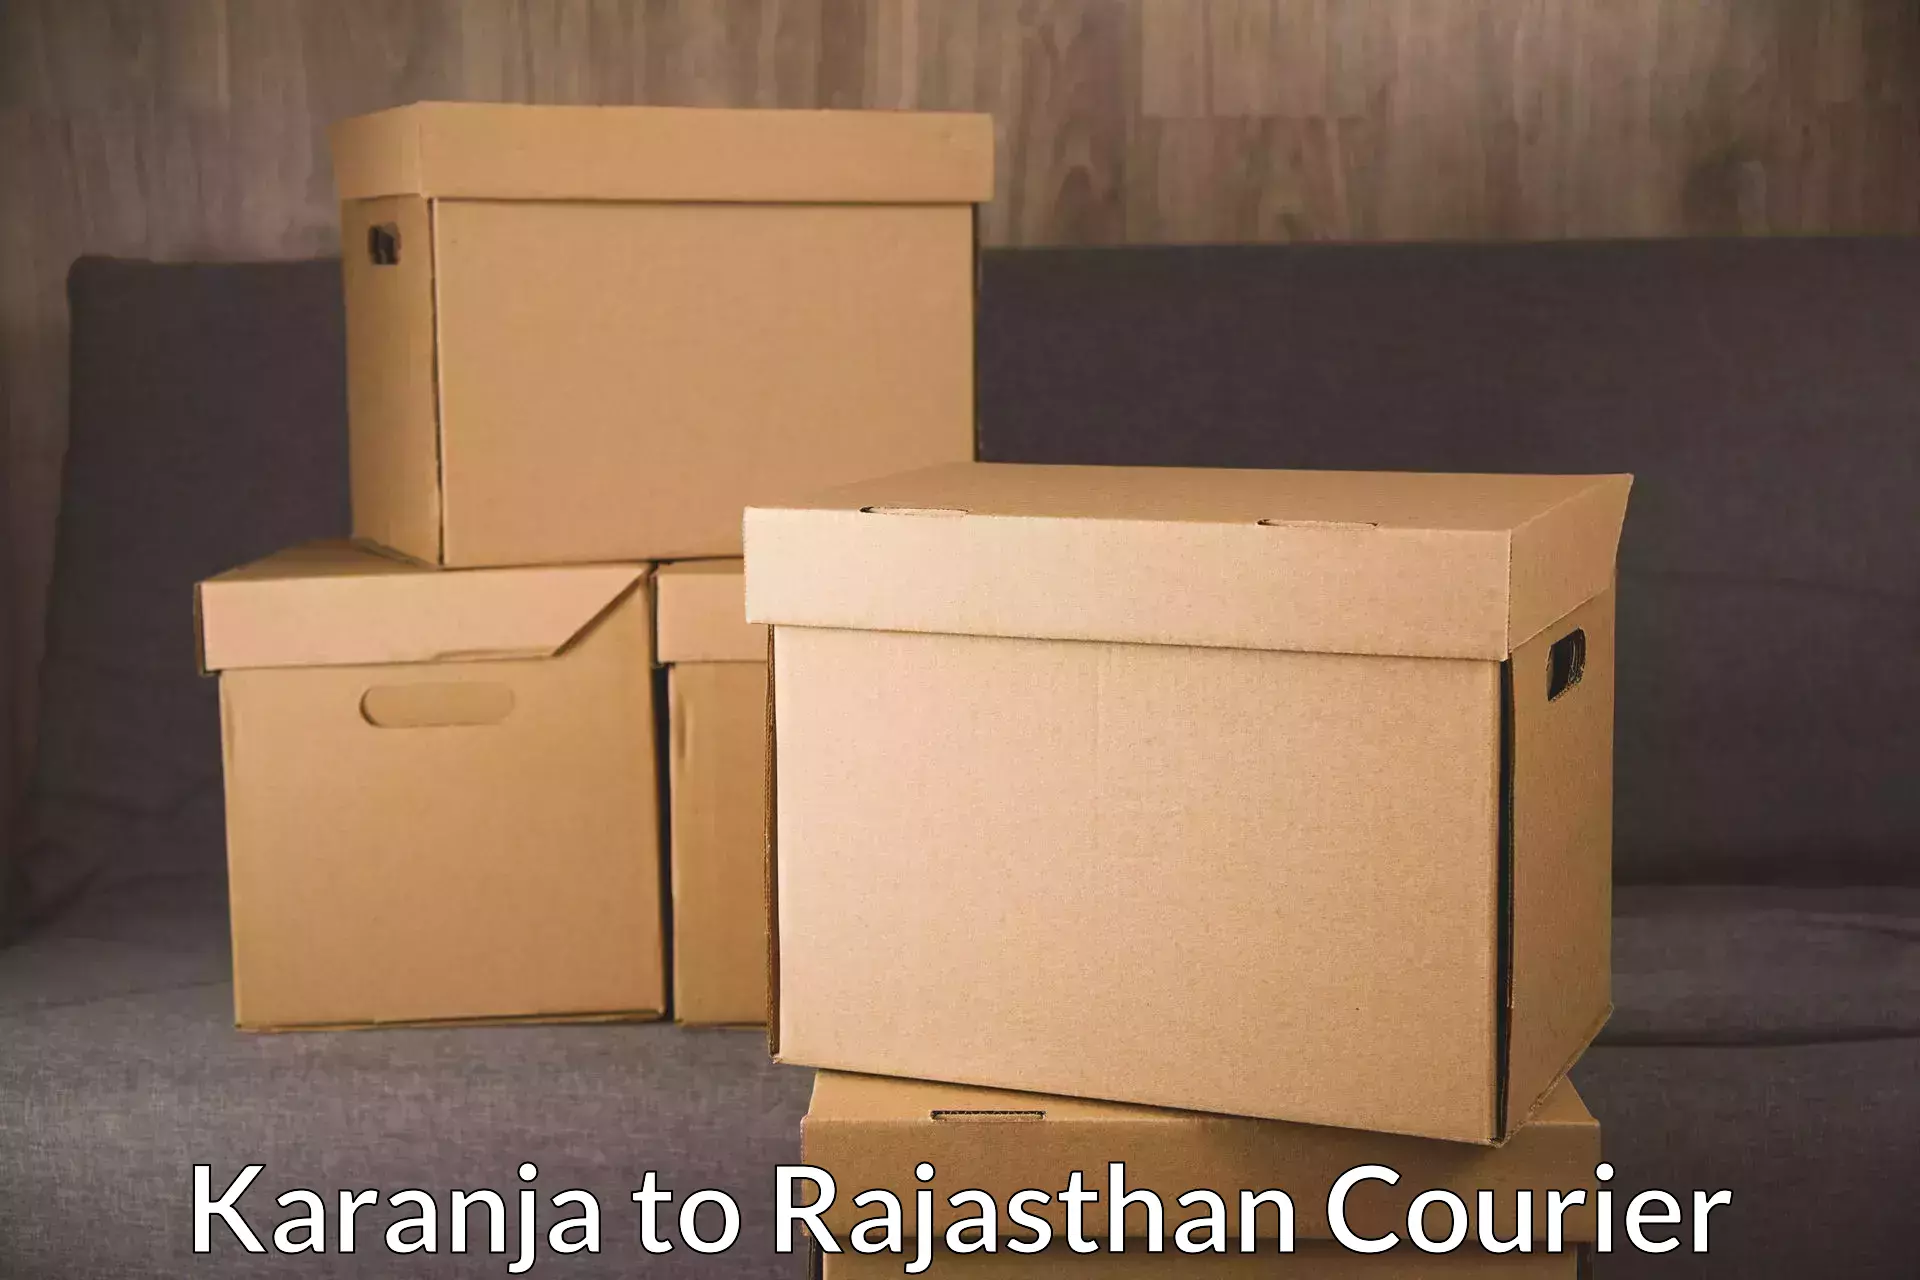 Courier service comparison Karanja to Gharsana